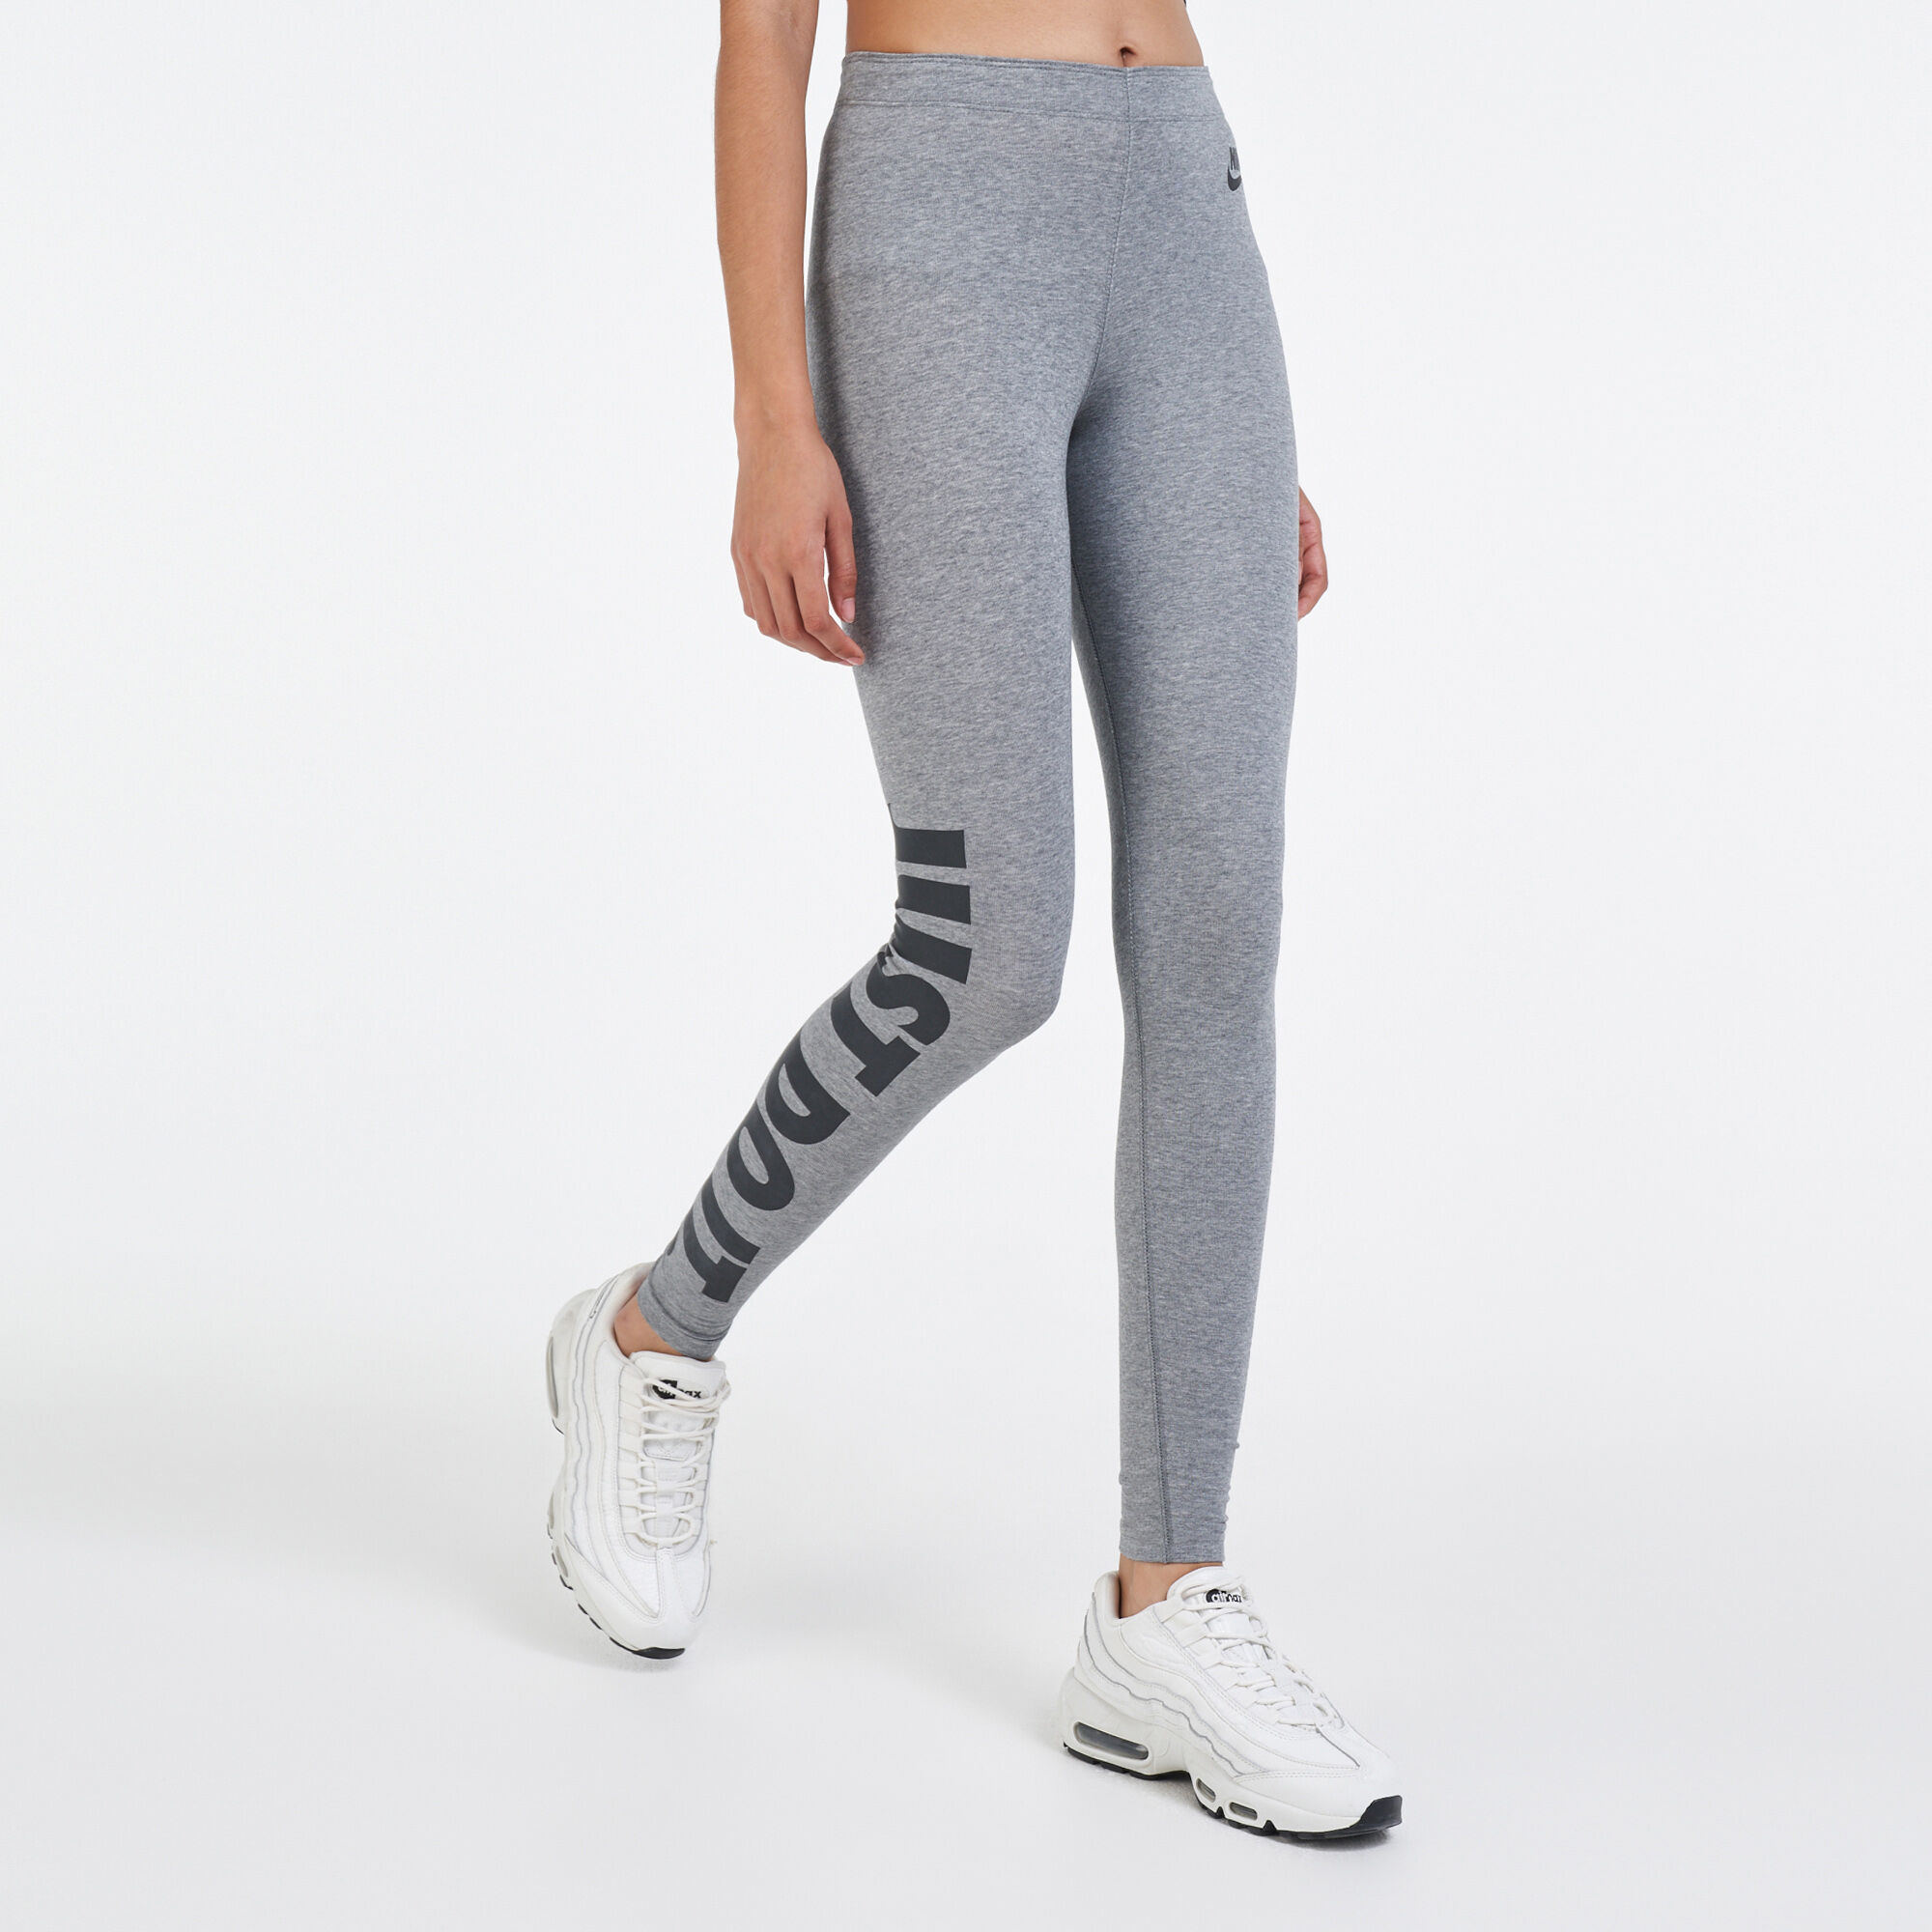 Nike Womens Leg-A-See Knee Length Leggings Size Small Grey Heather